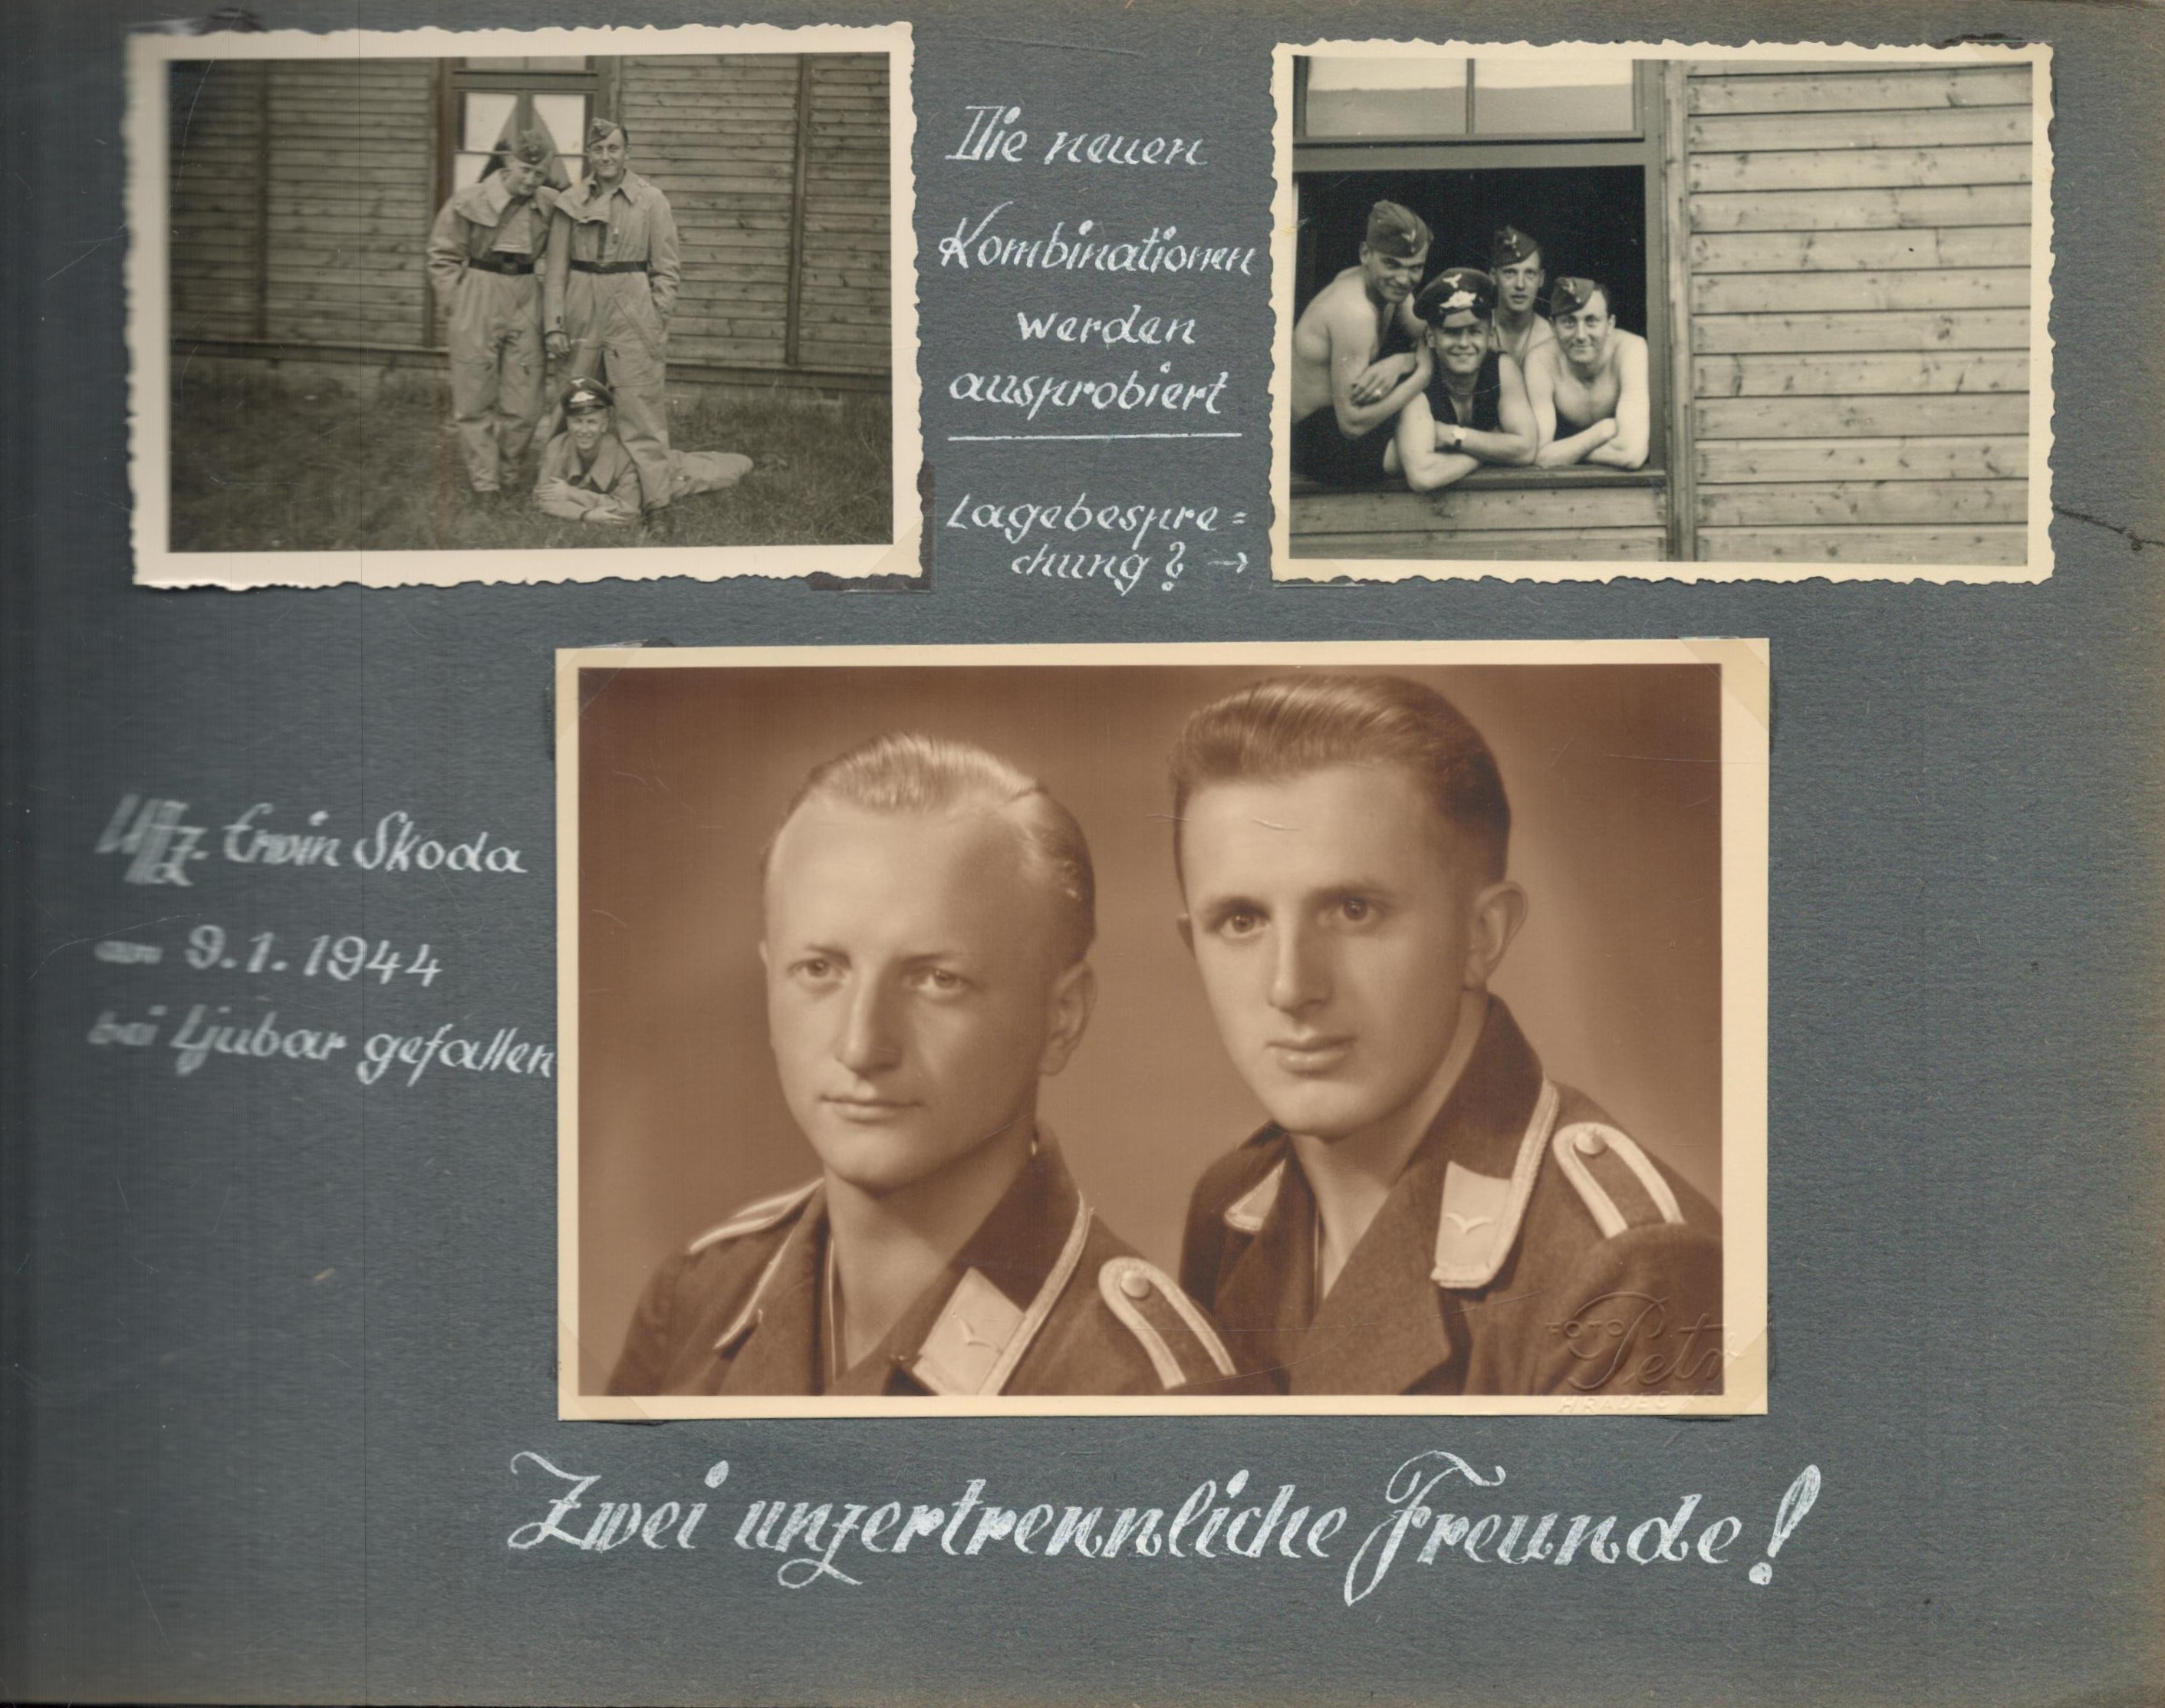 Luftwaffe Stuka Operator photo album of the career and war memories of Erich Heine rear gunner and - Image 8 of 12